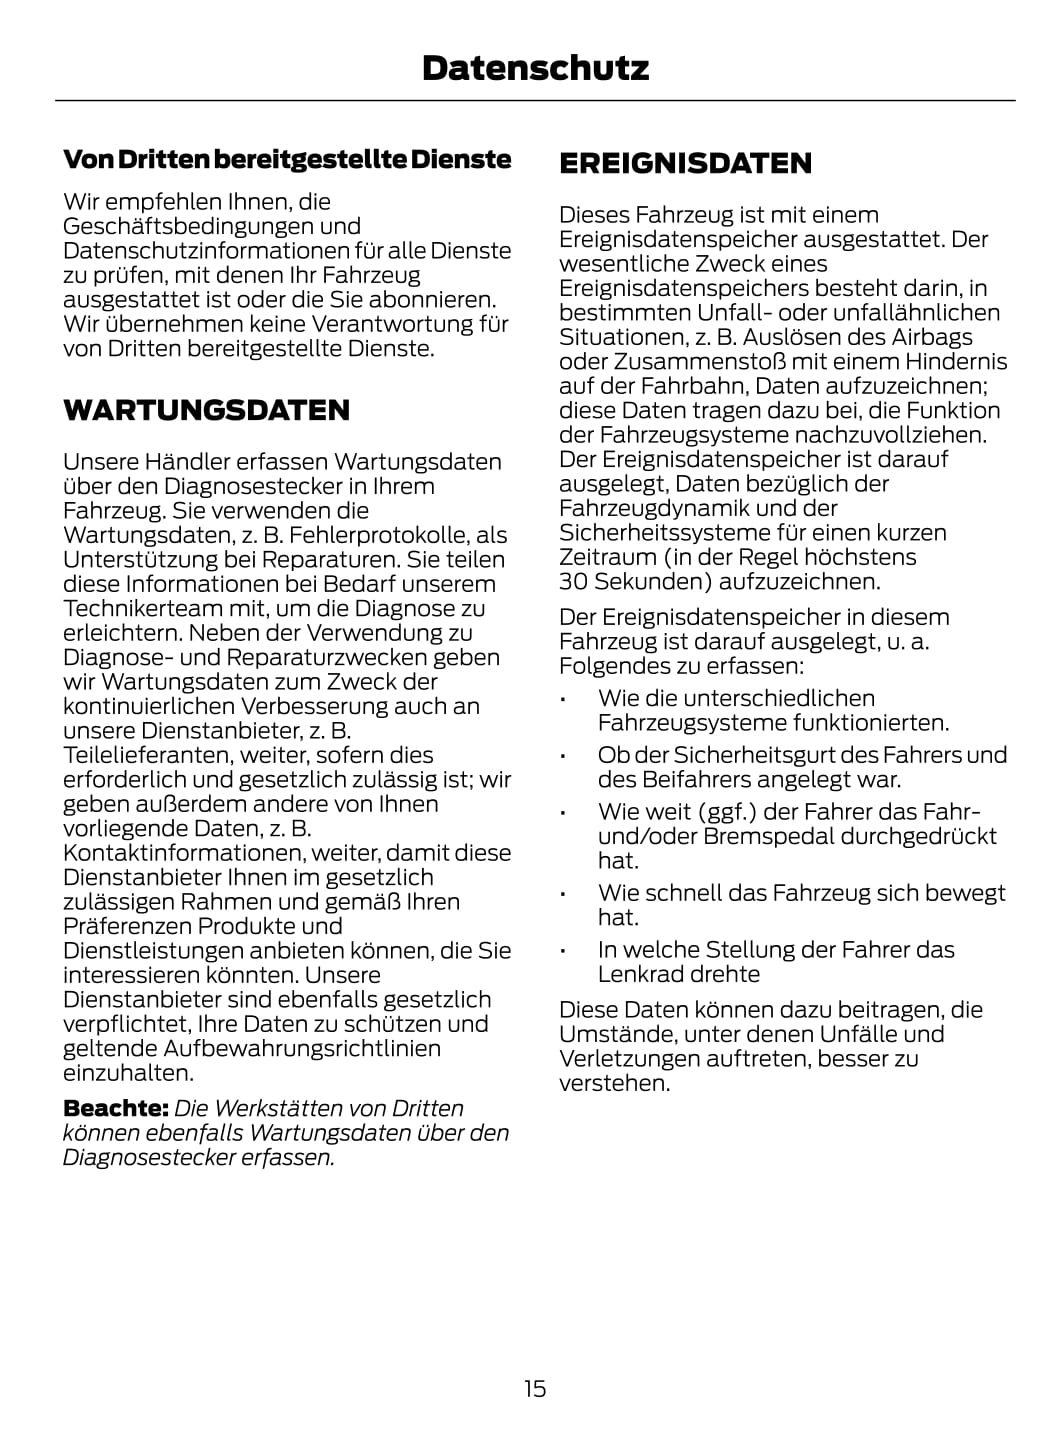 2020-2023 Ford Explorer Gebruikershandleiding | Duits